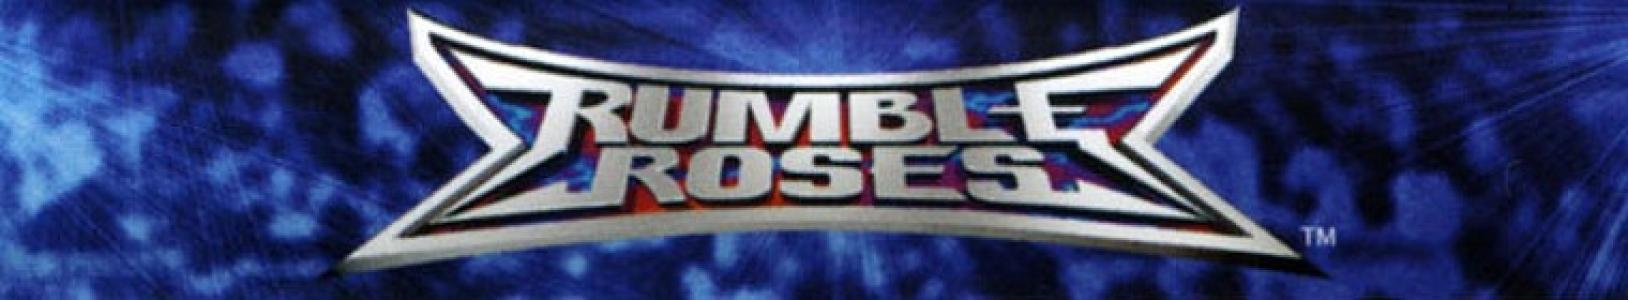 Rumble Roses banner